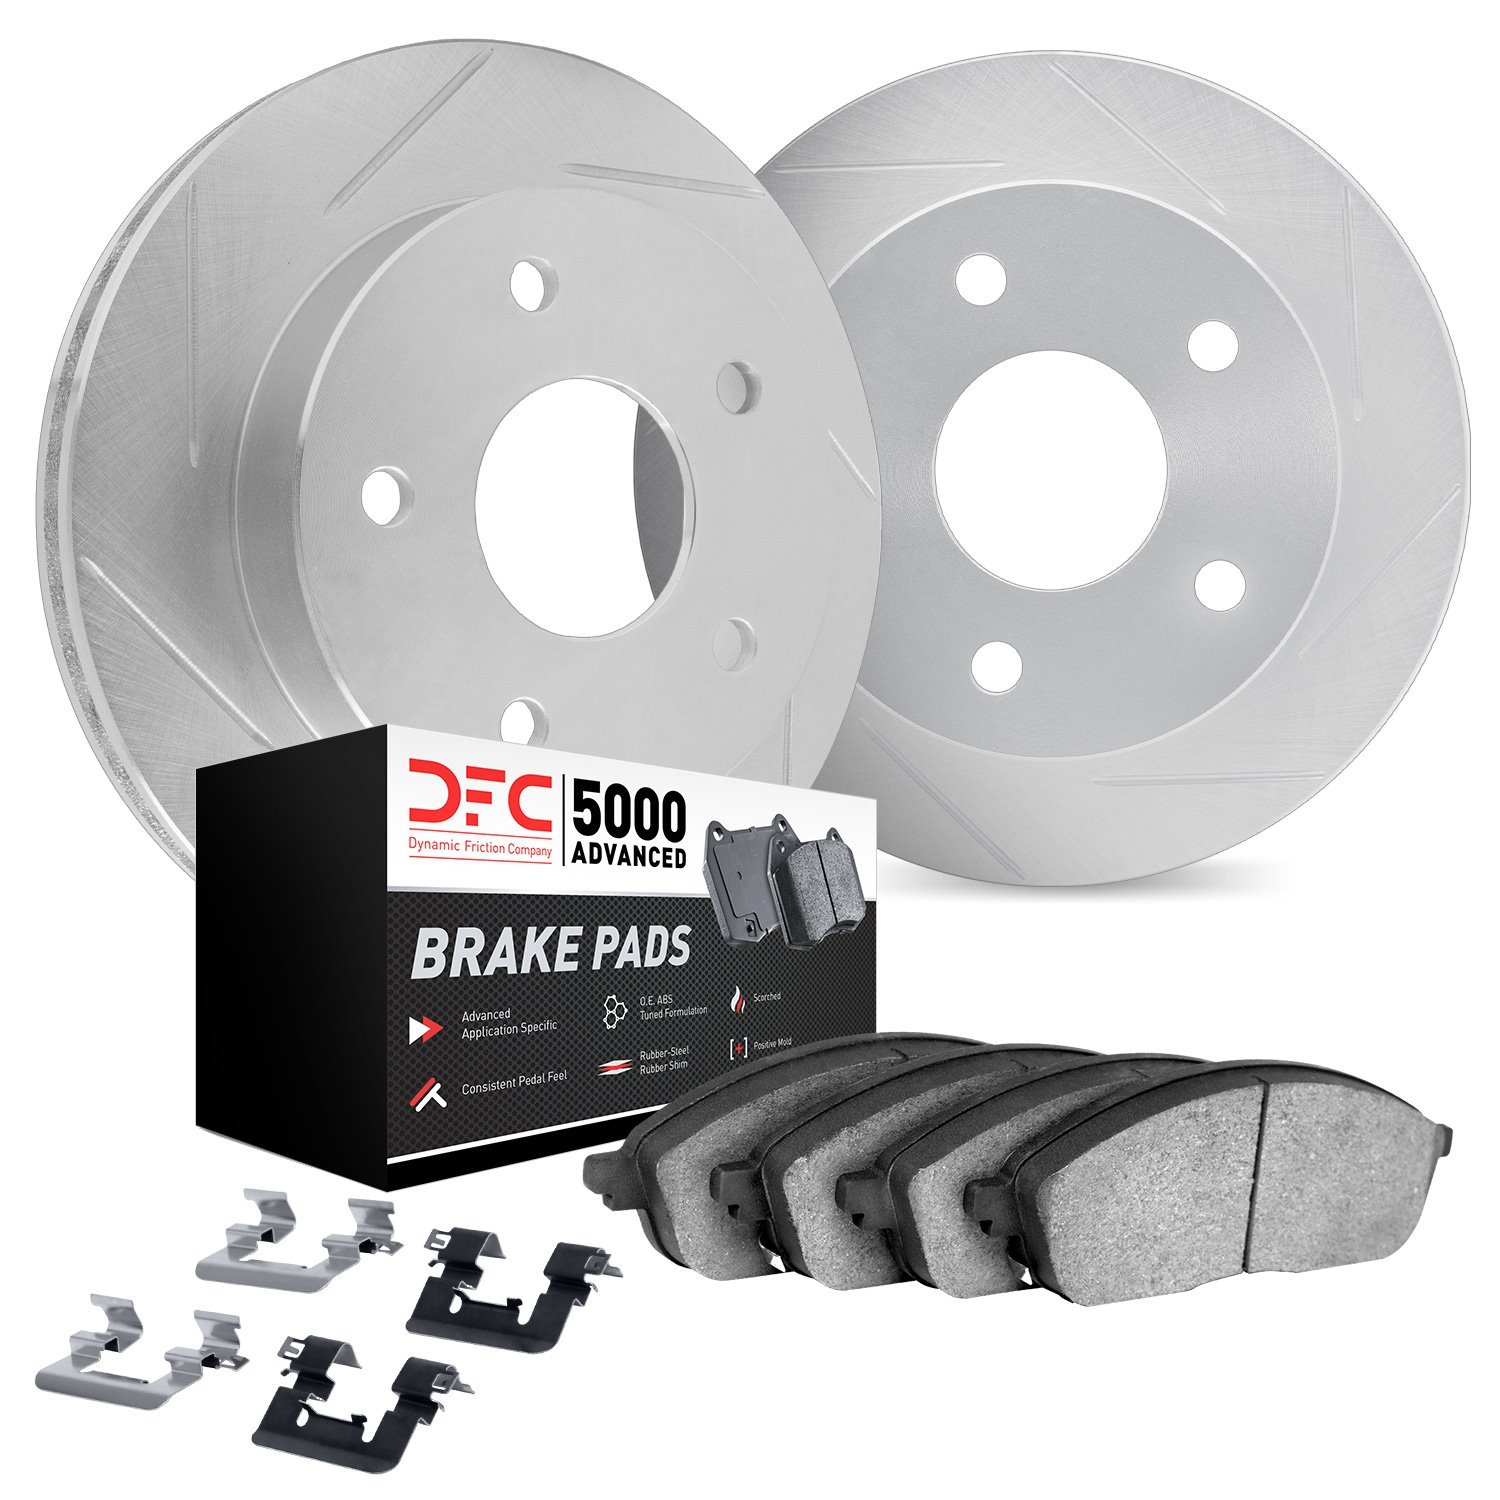 5512-54225 Slotted Brake Rotors w/5000 Advanced Brake Pads Kit & Hardware [Silver], 2013-2019 Ford/Lincoln/Mercury/Mazda, Positi